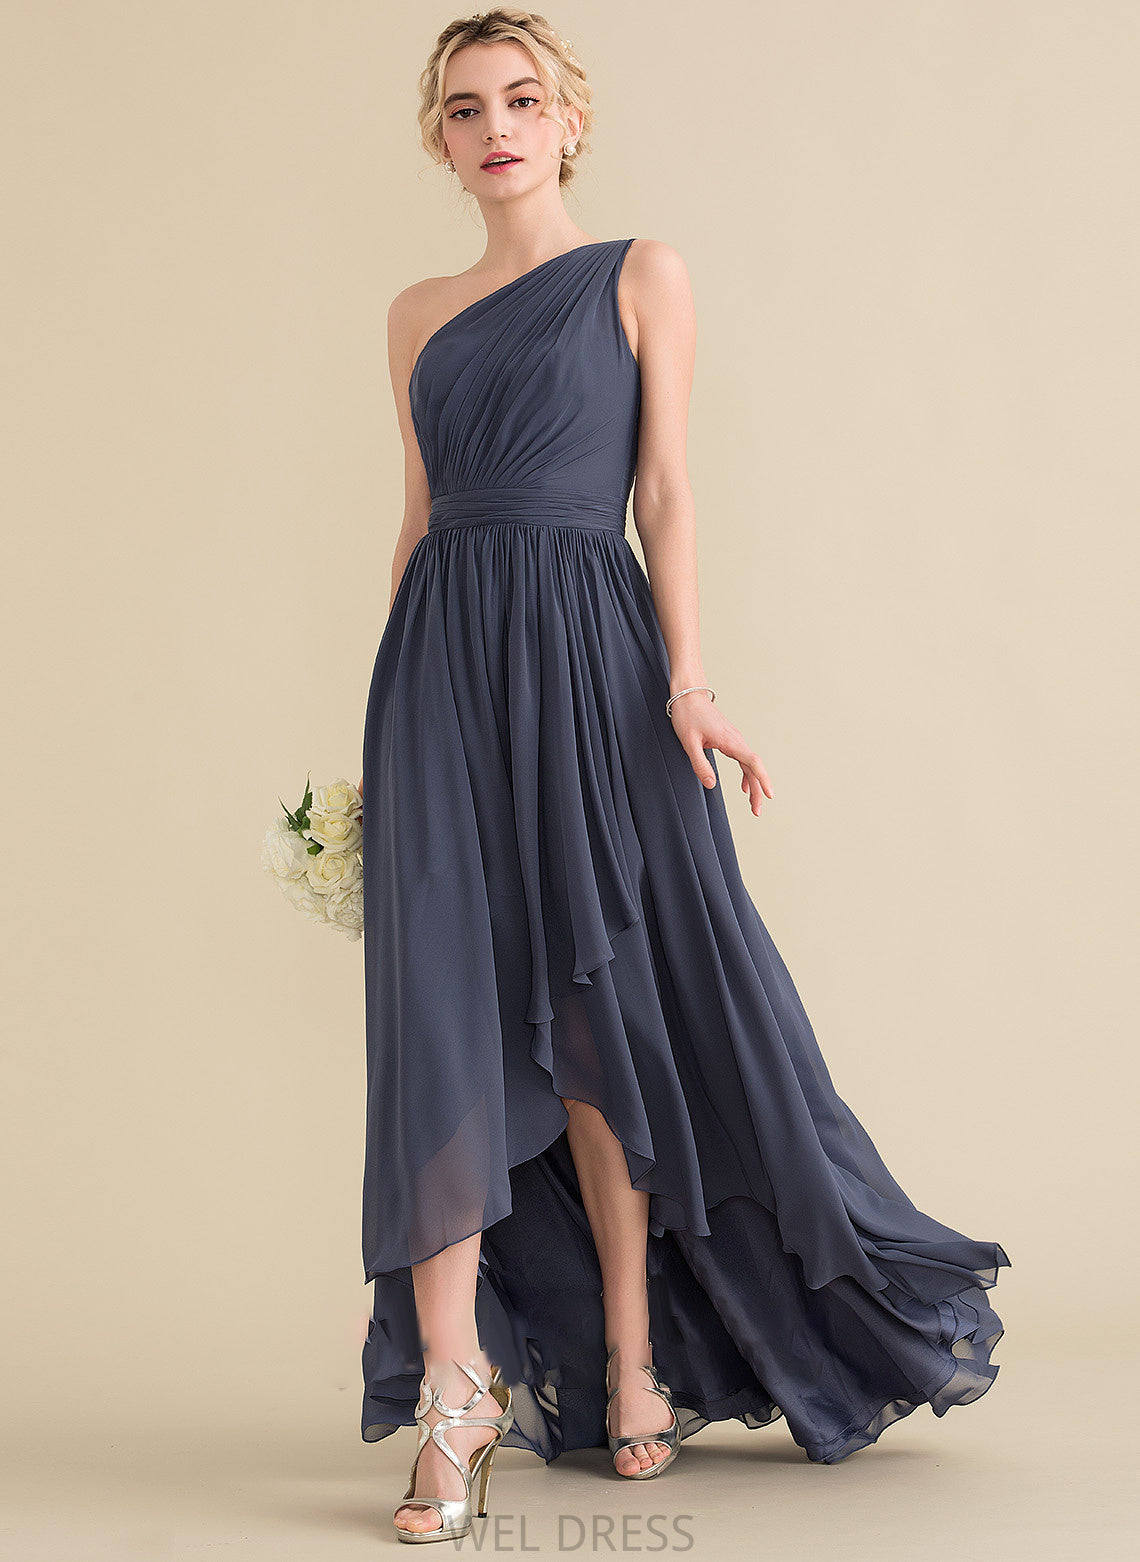 Silhouette Length One-Shoulder CascadingRuffles Neckline Fabric A-Line Embellishment Asymmetrical Natalya Floor Length Sleeveless